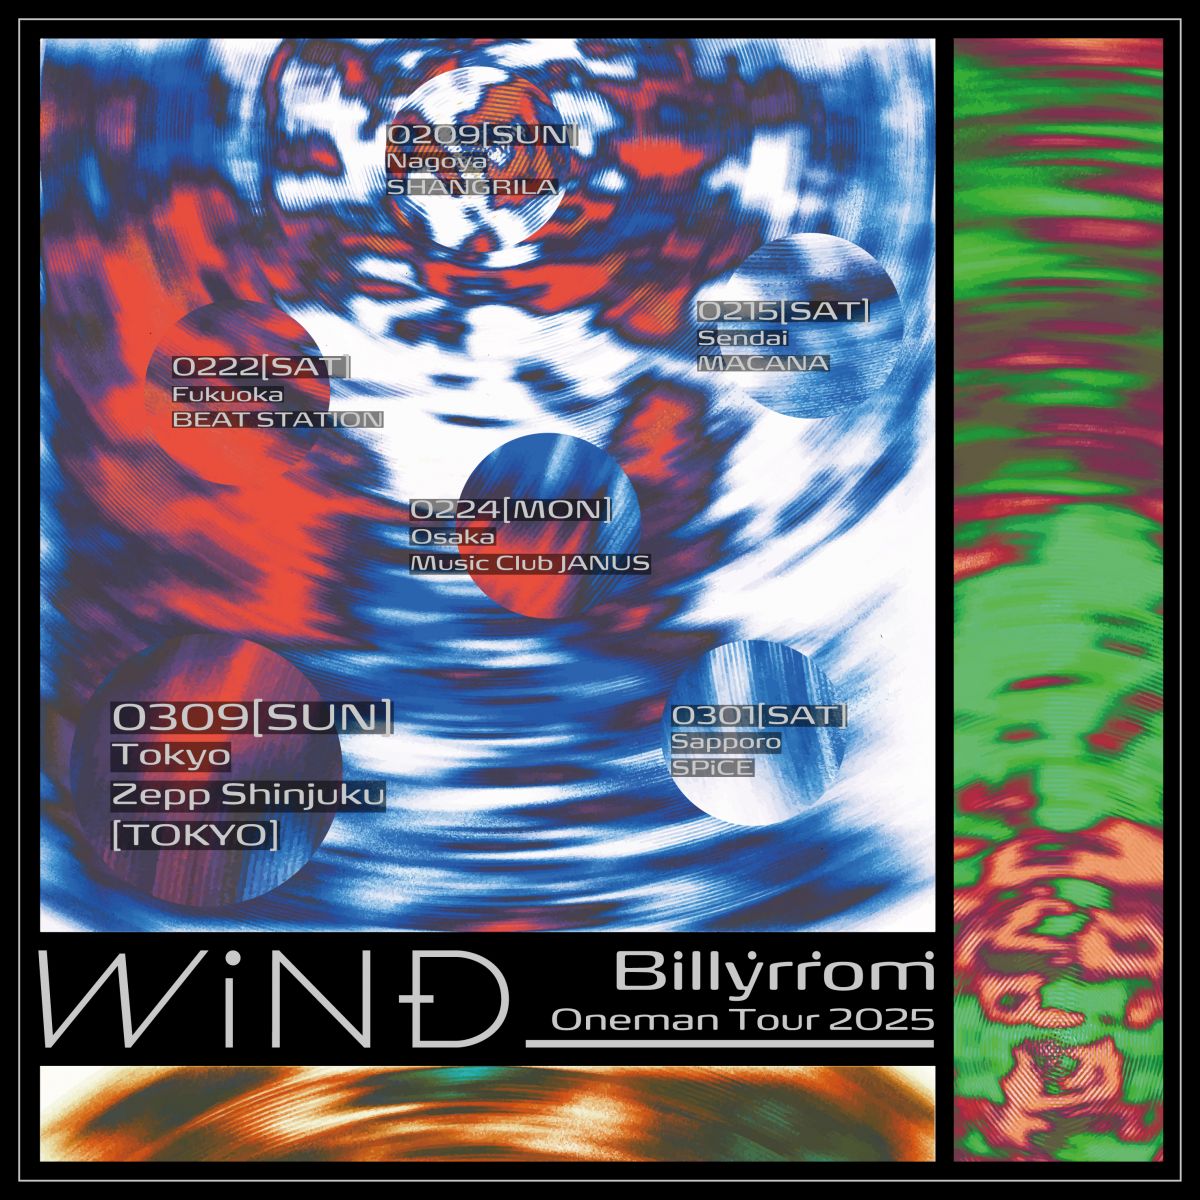 Billyrrom Oneman Tour 2025 “WiND”